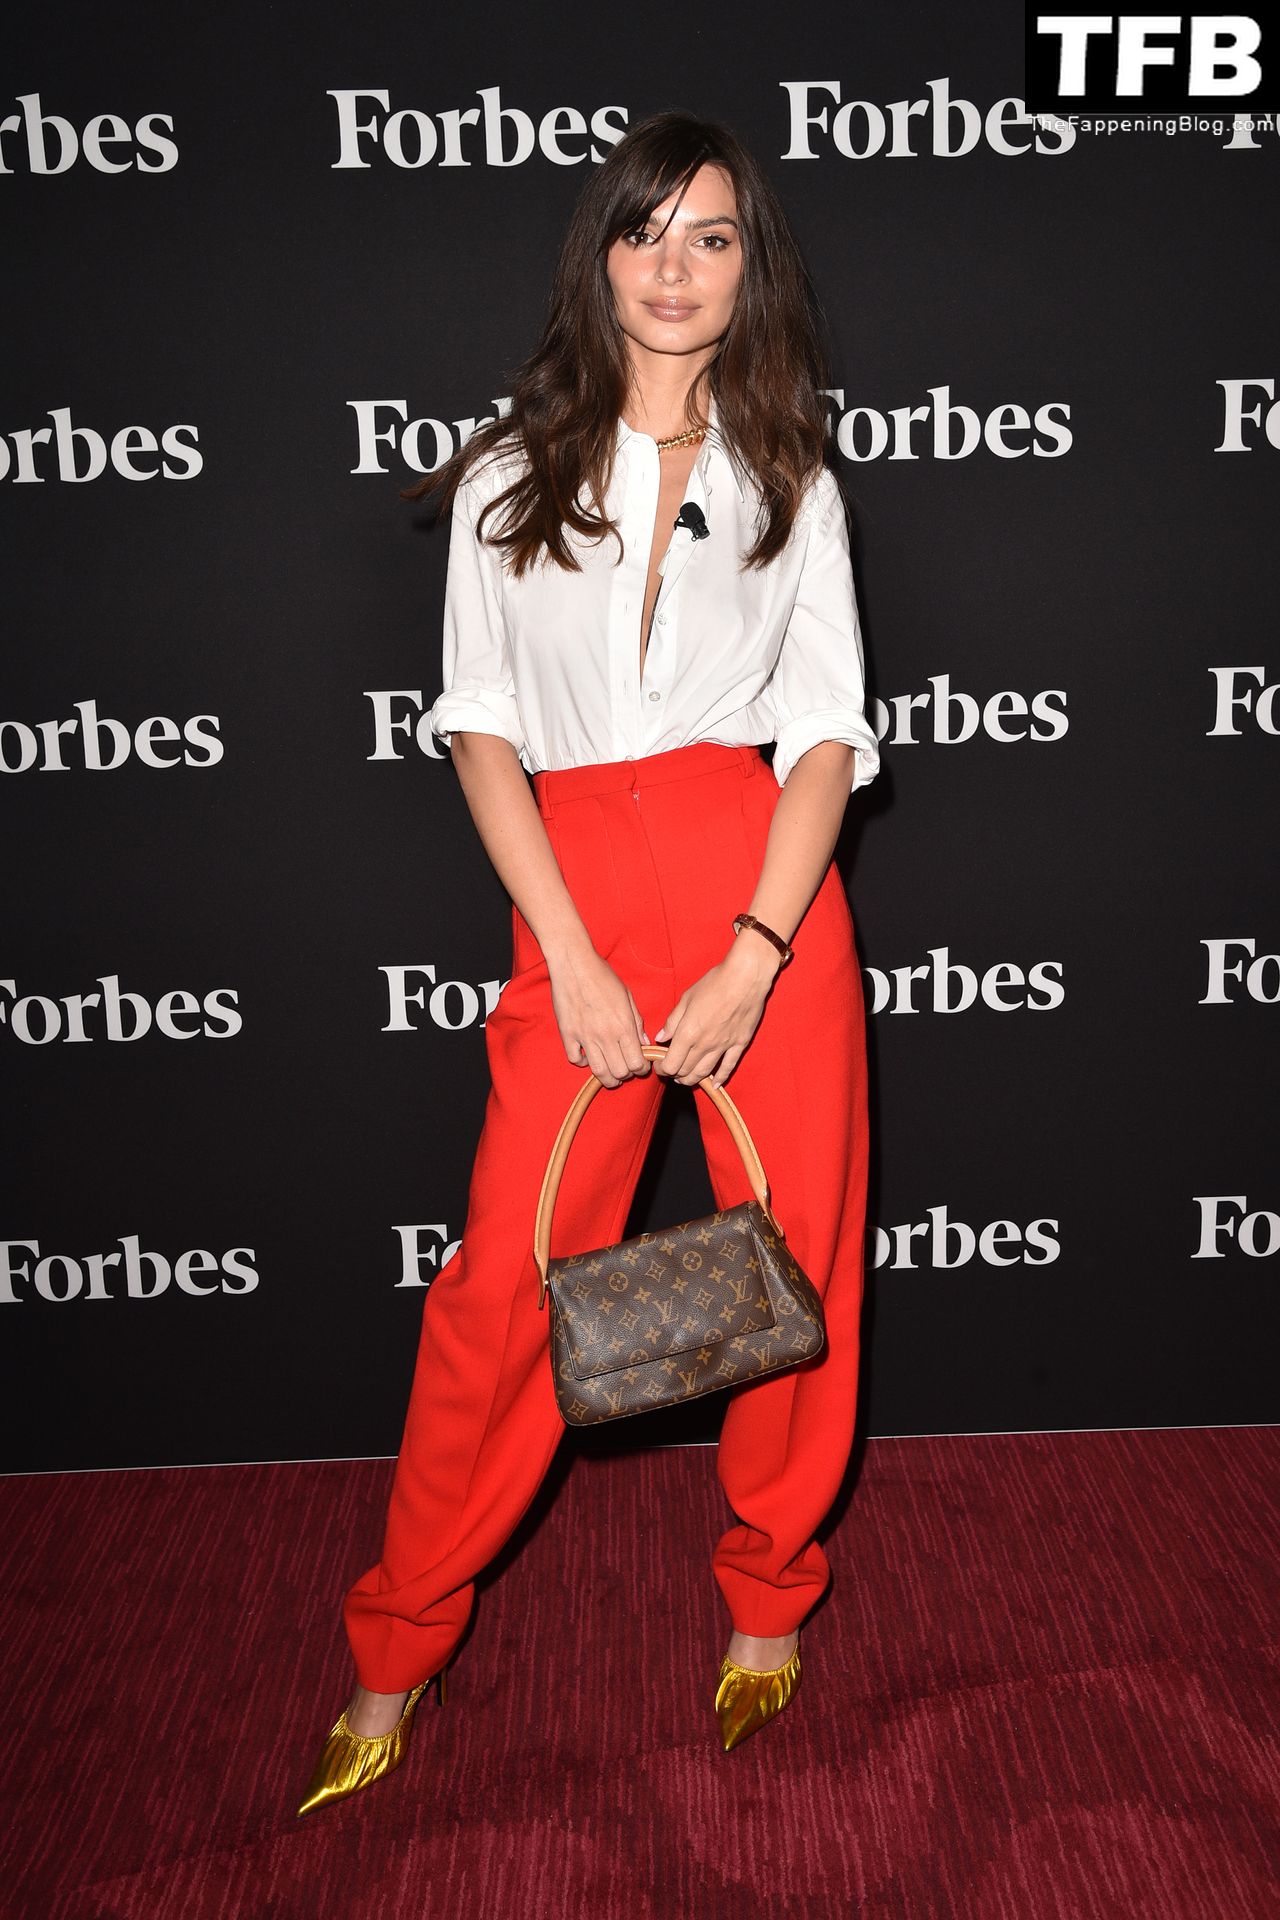 Emily Ratajkowski Sexy The Fappening Blog 65 - Newly Single Emily Ratajkowski Attends Forbes Power Women’s Summit in NYC (66 Photos)